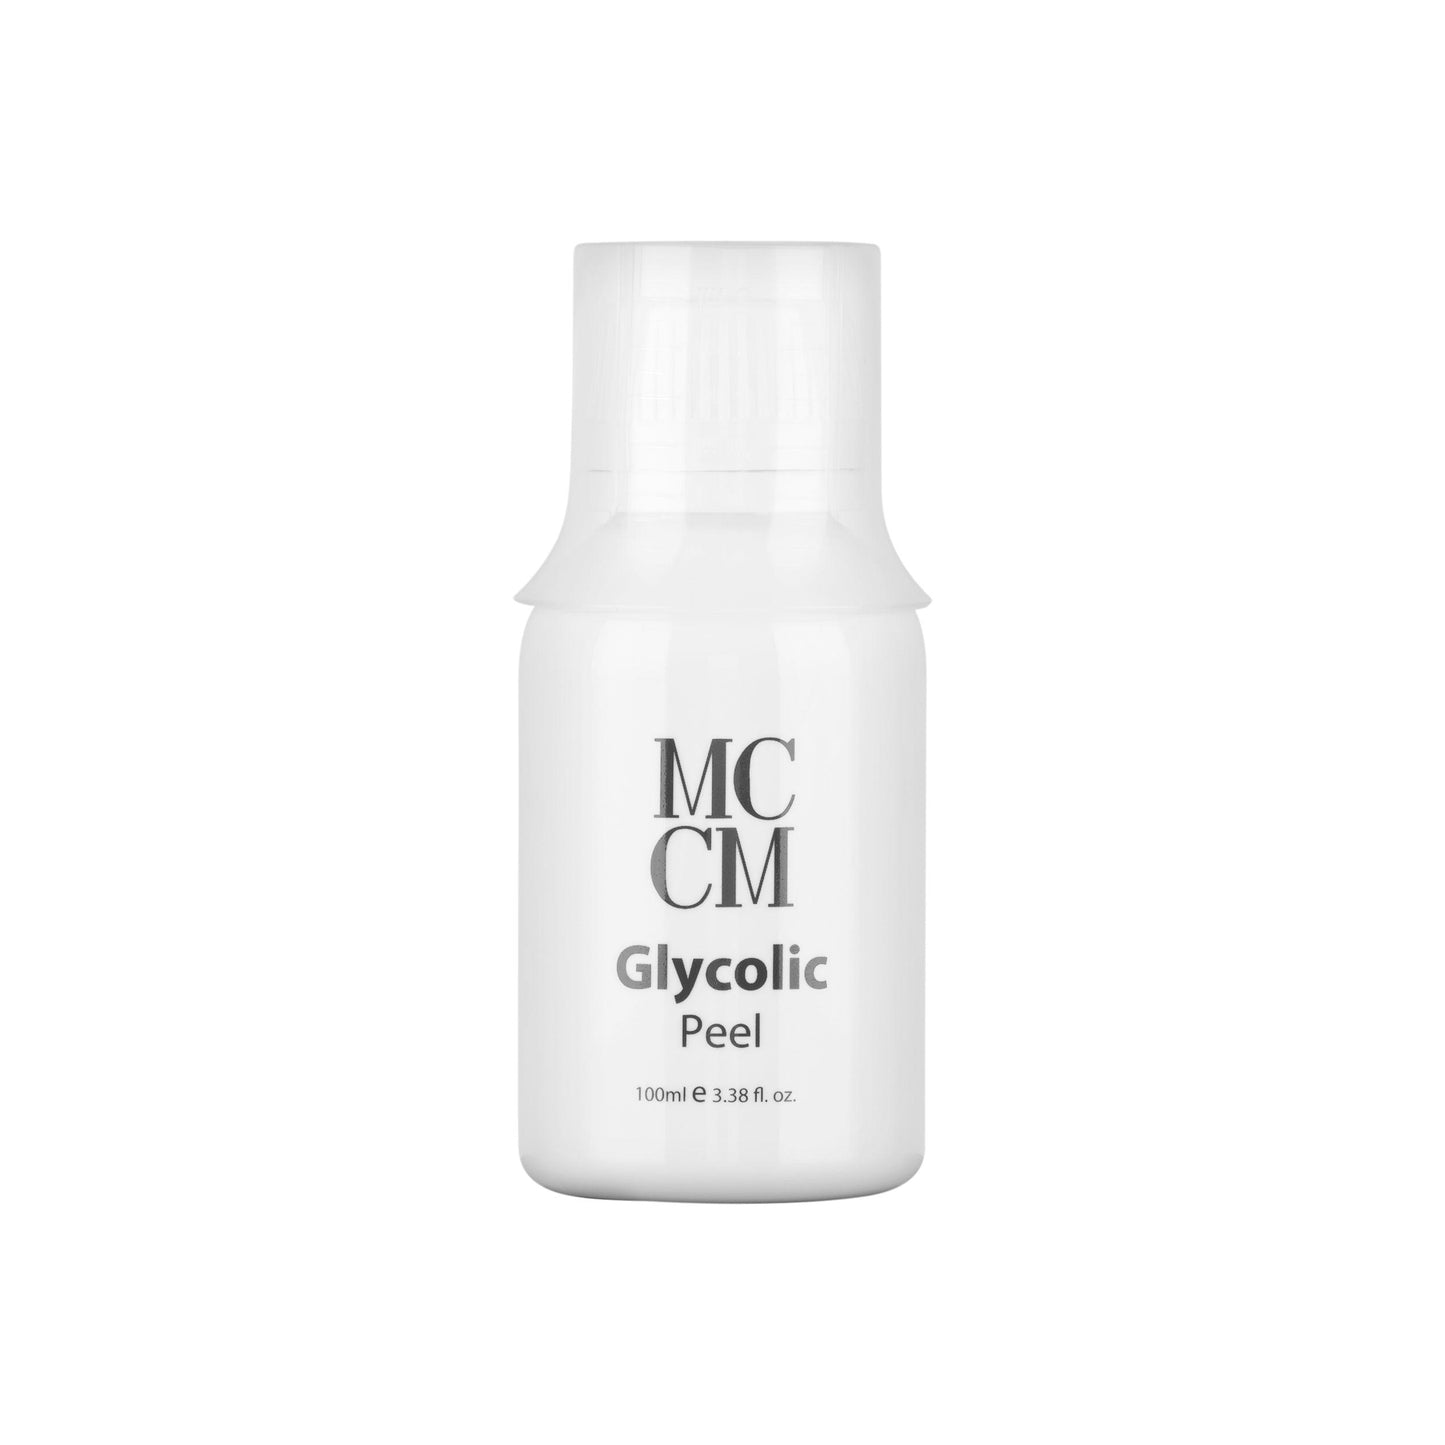 Glycolic Peel - MCCM Medical Cosmetics